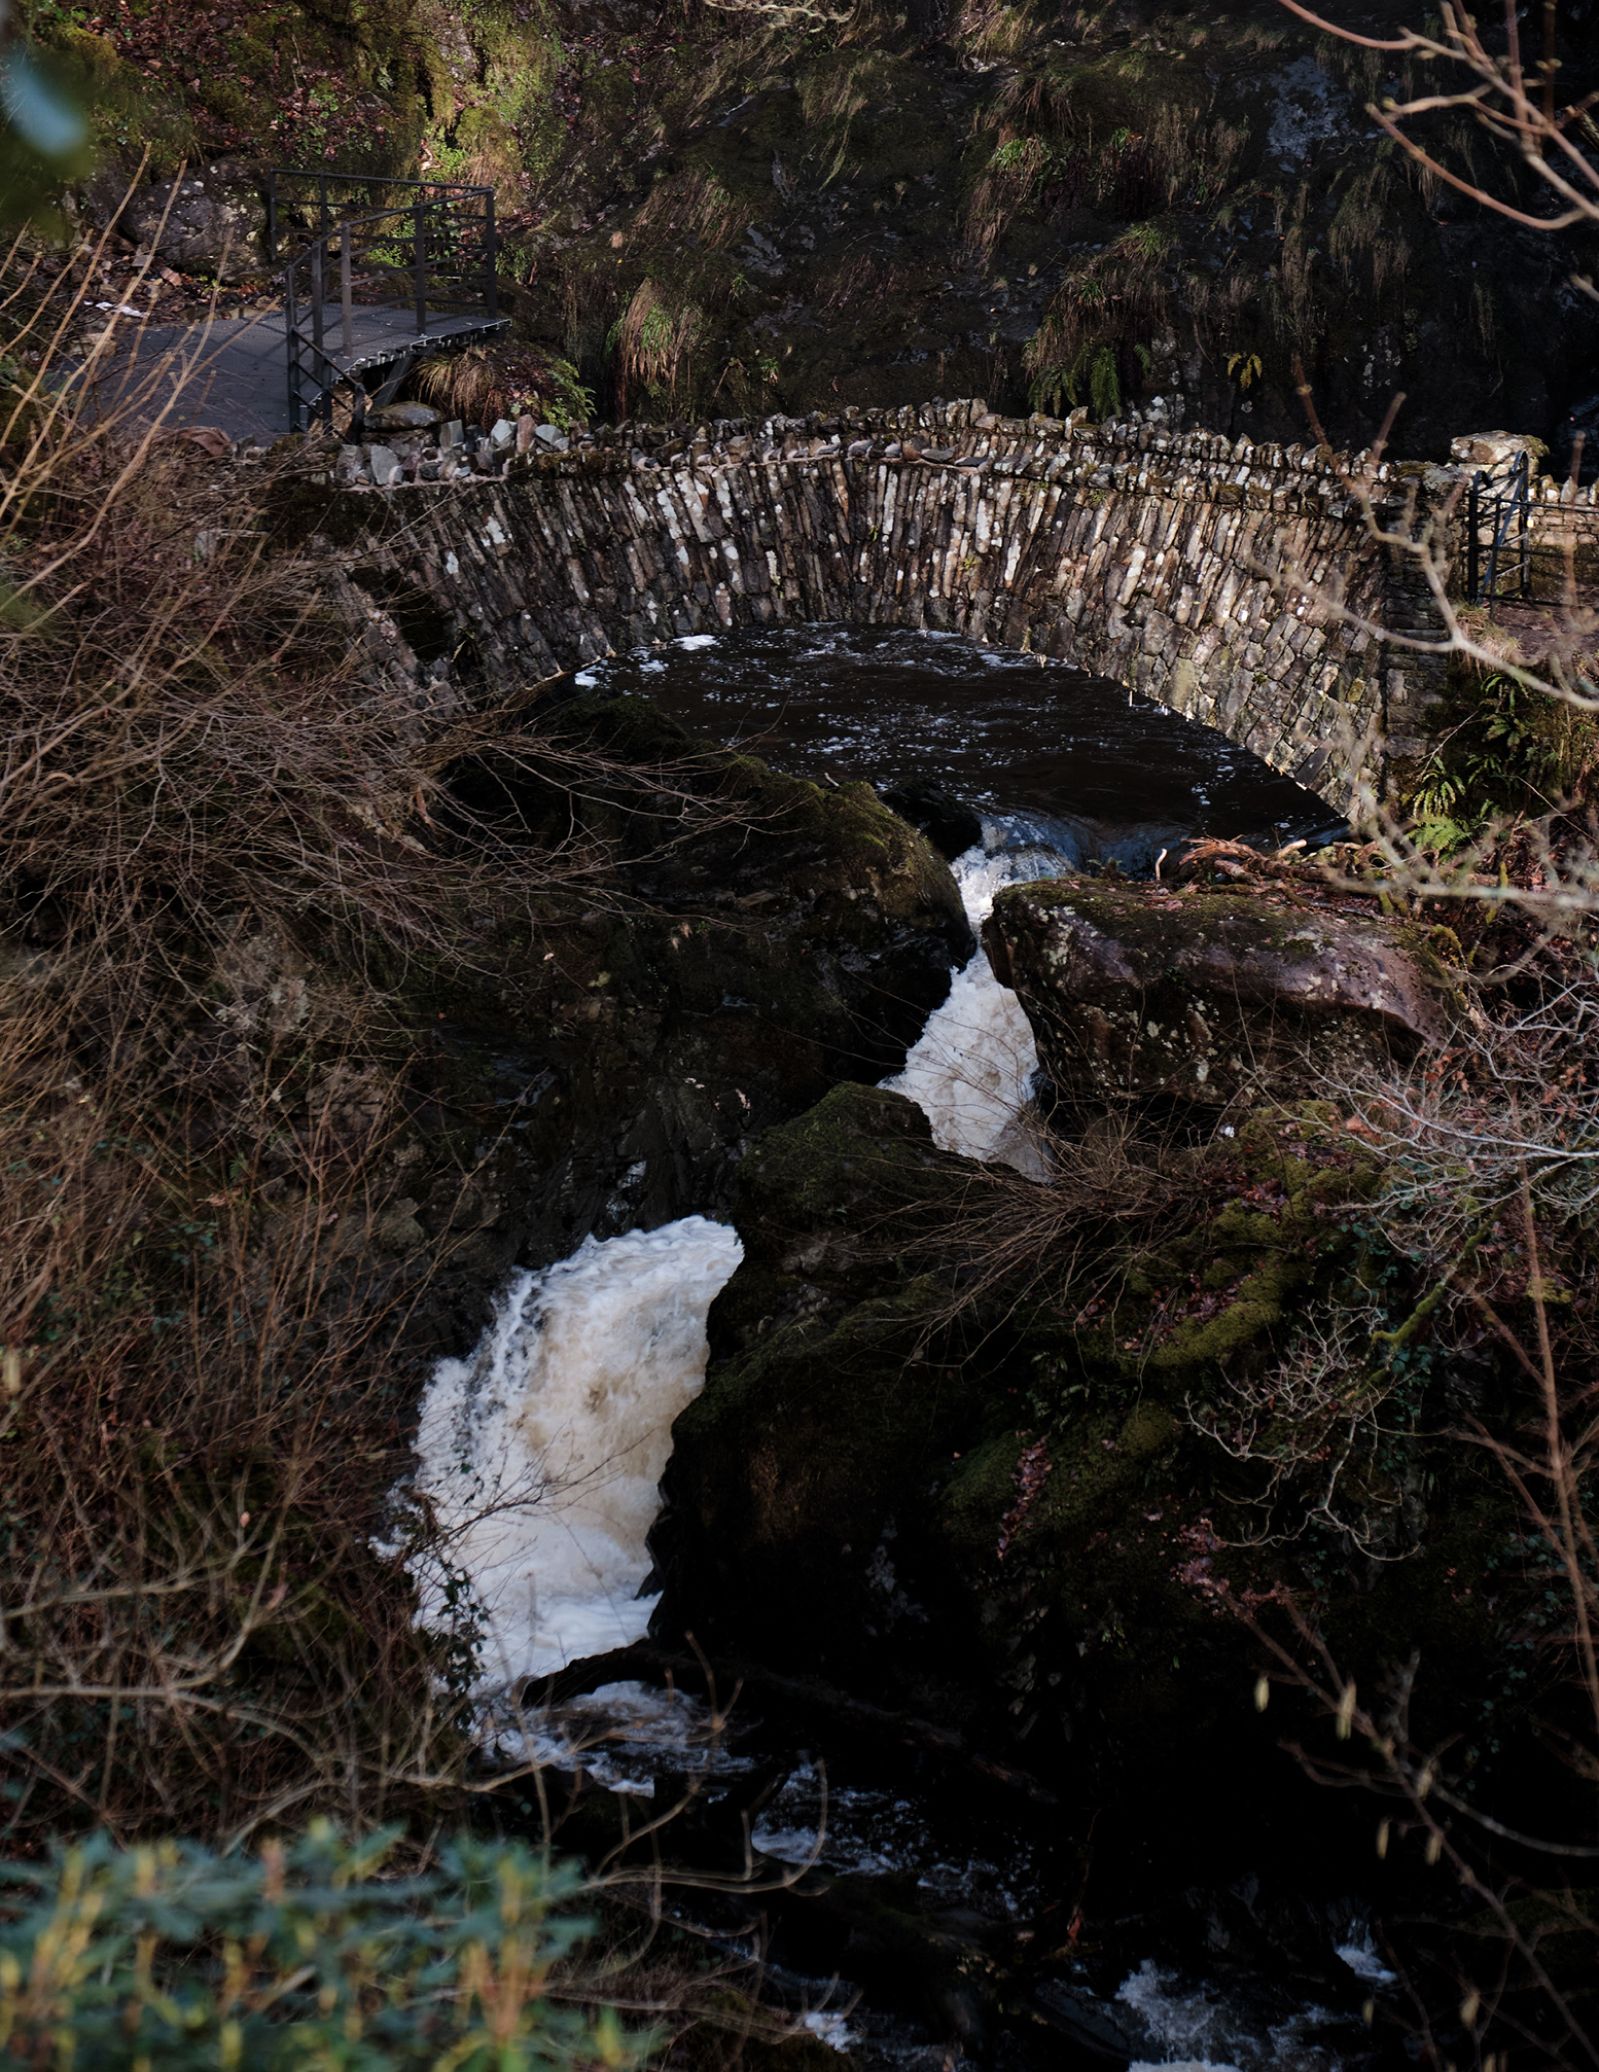 A waterfall snaking under an old stone bridge.